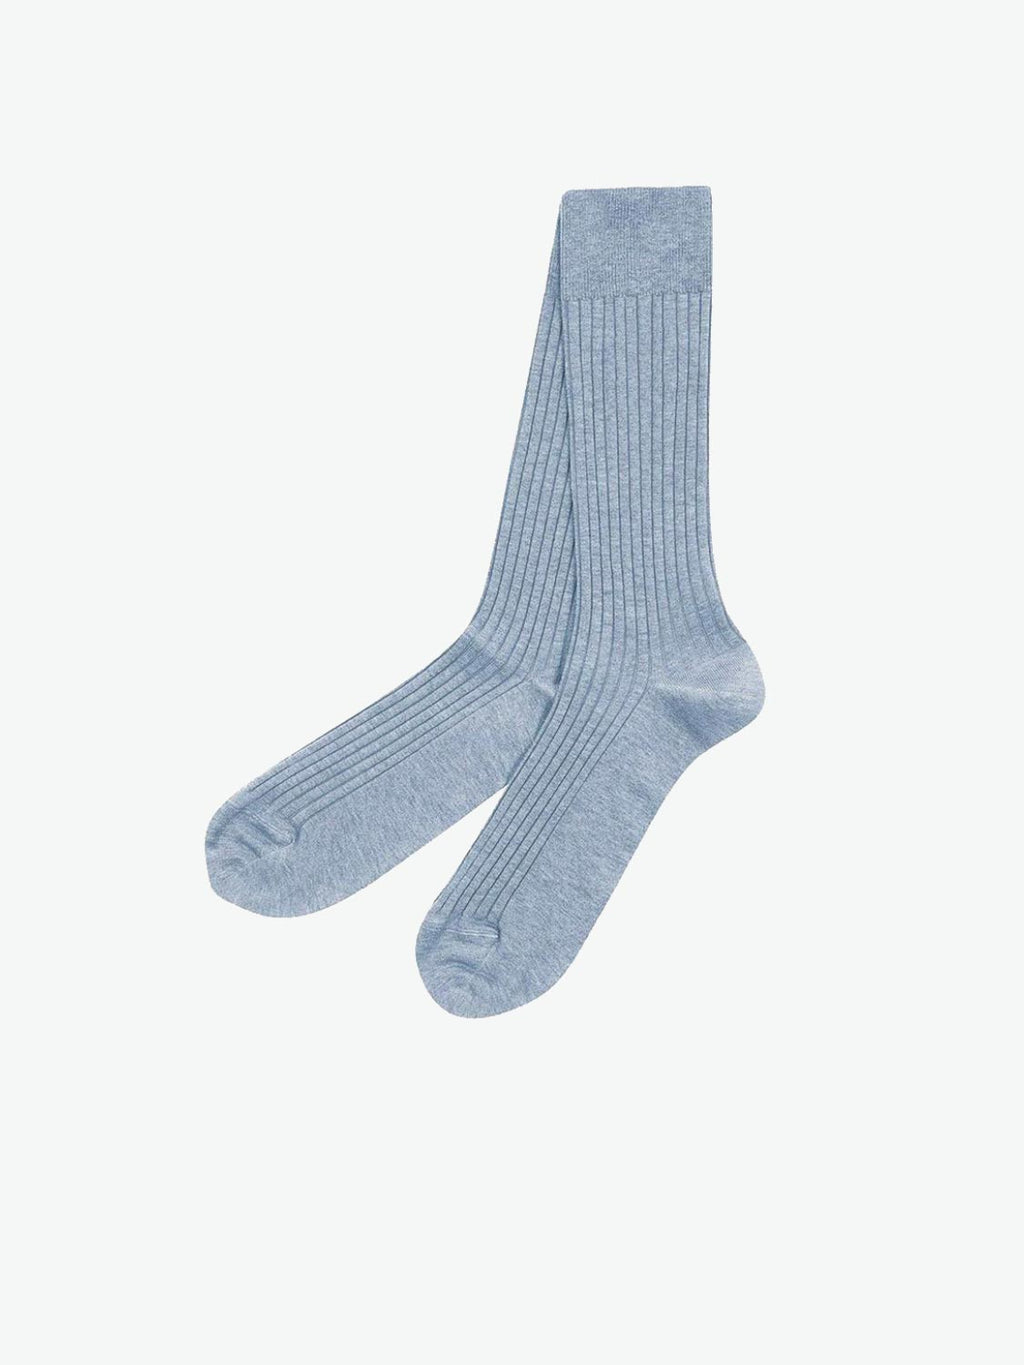 Pantherella Socks | Menswear | The Project Garments